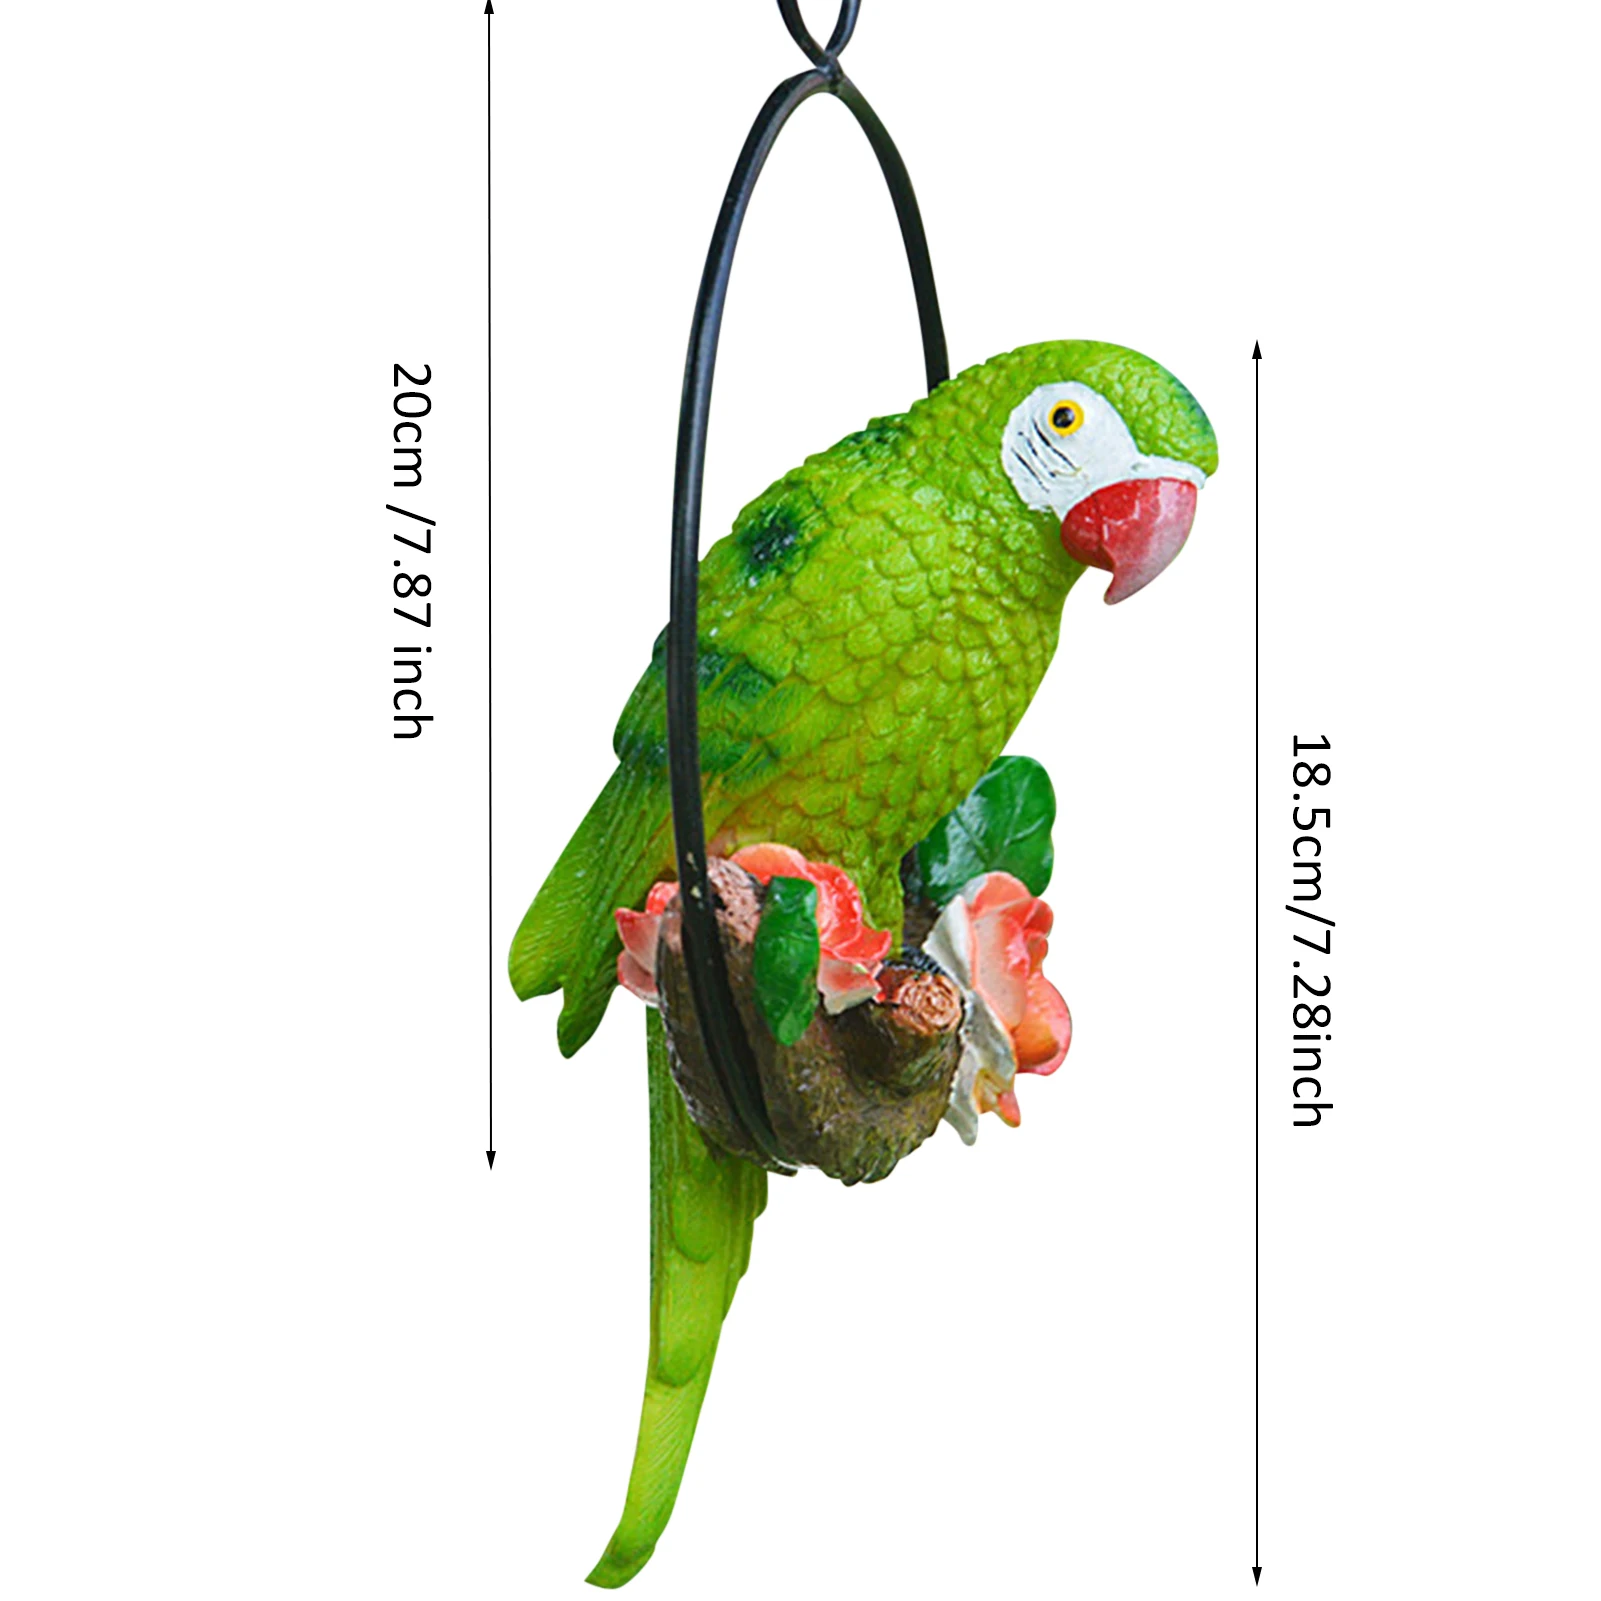 Details about   Hanging Parrot Statue Perch on Metal Ring Garden Sculpture Outdoor Landscape 